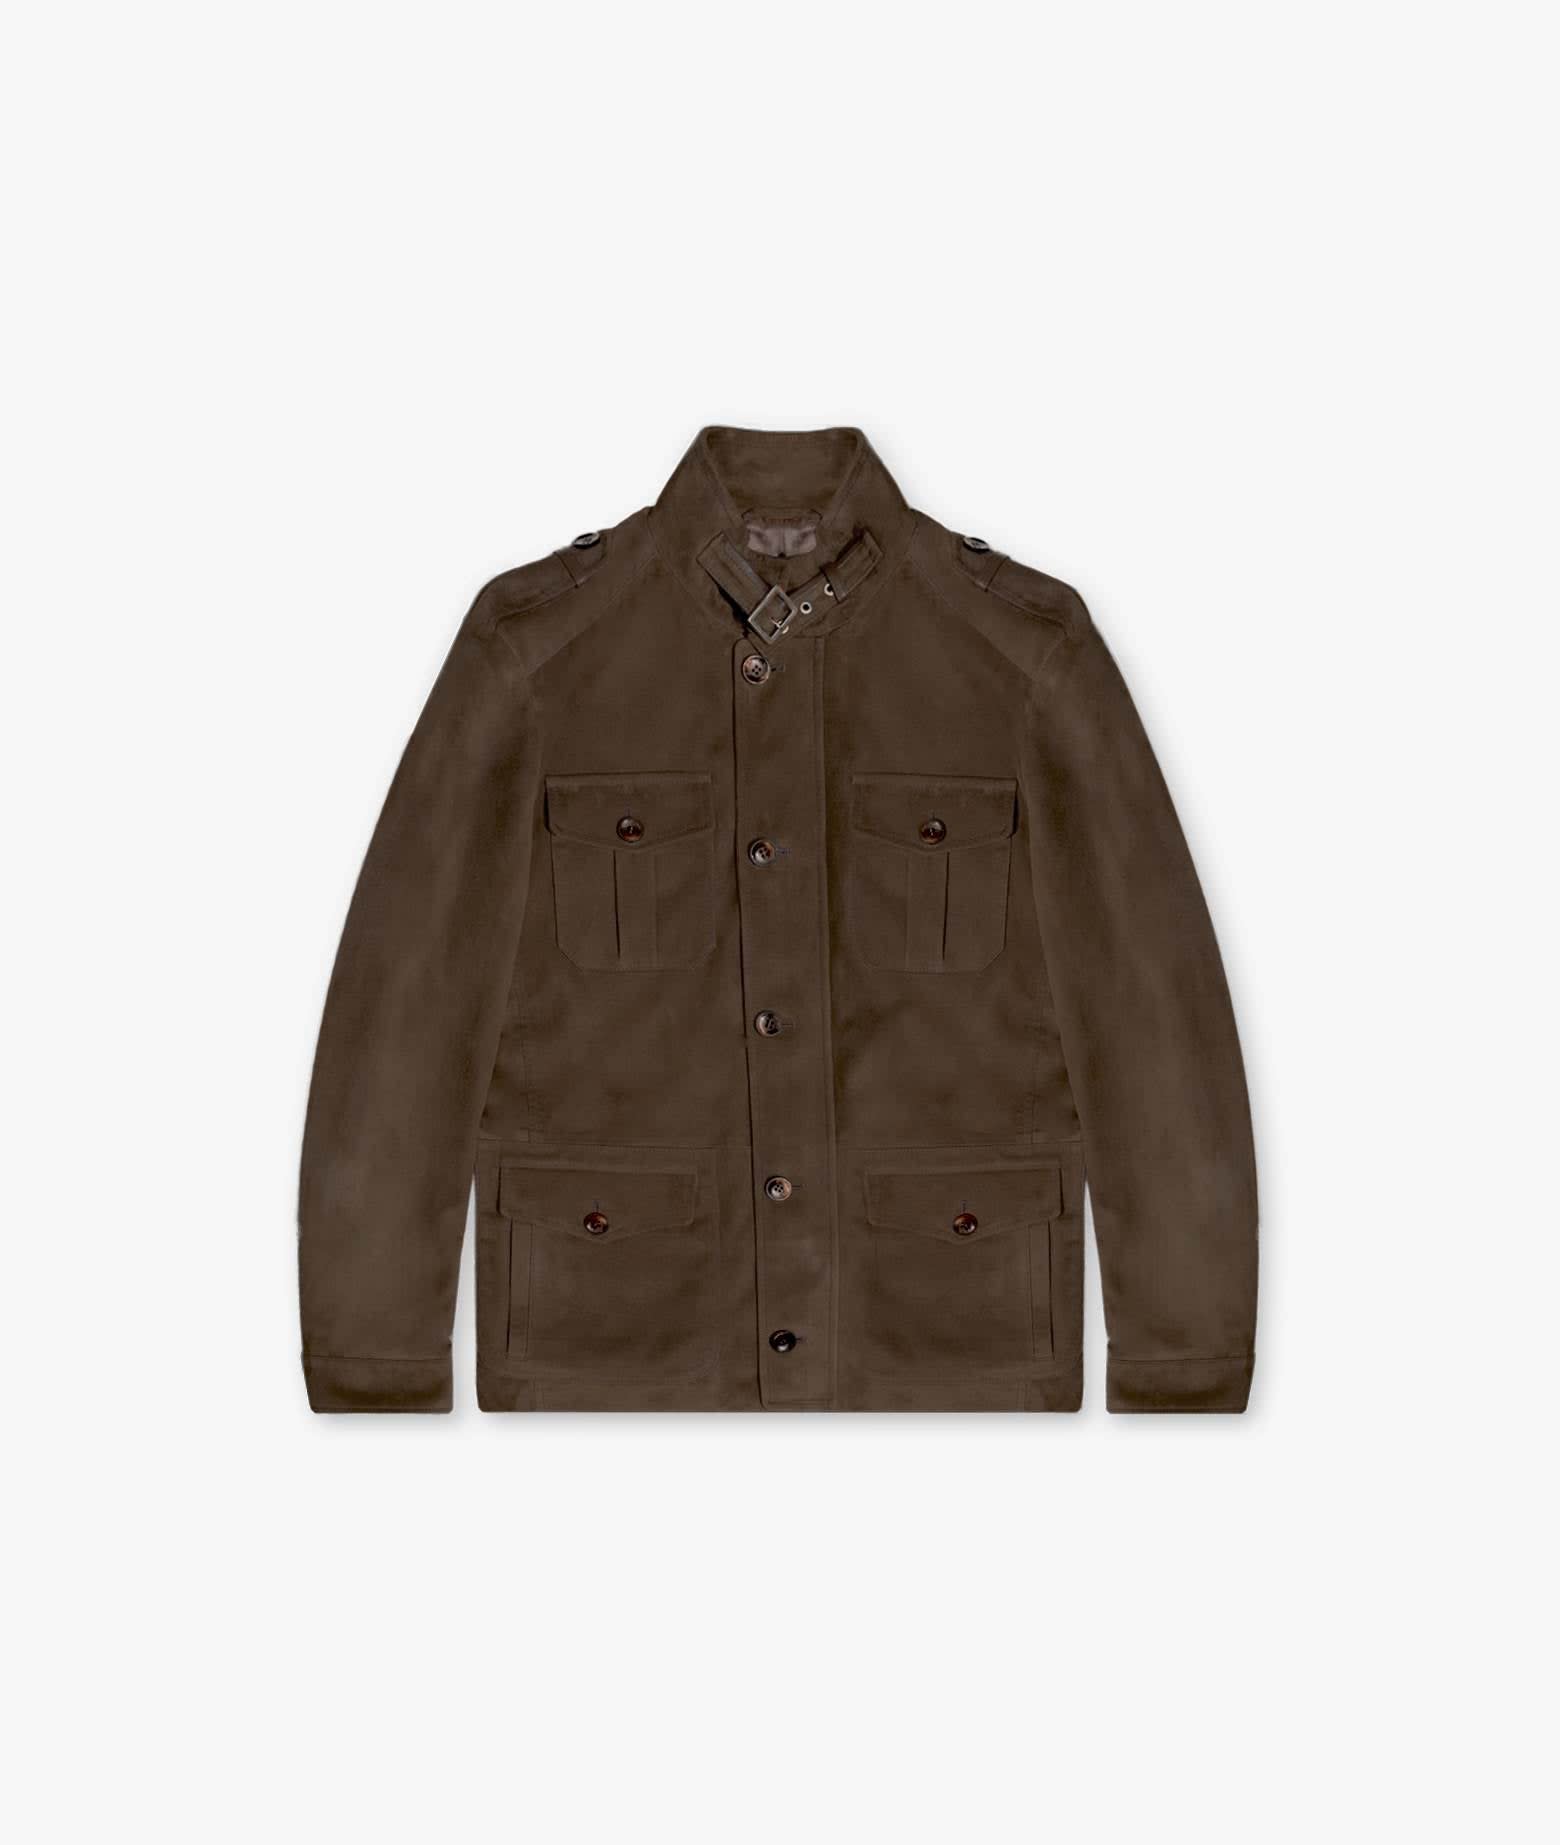 Larusmiani Devon Sahariana Jacket Leather Jacket In Brown